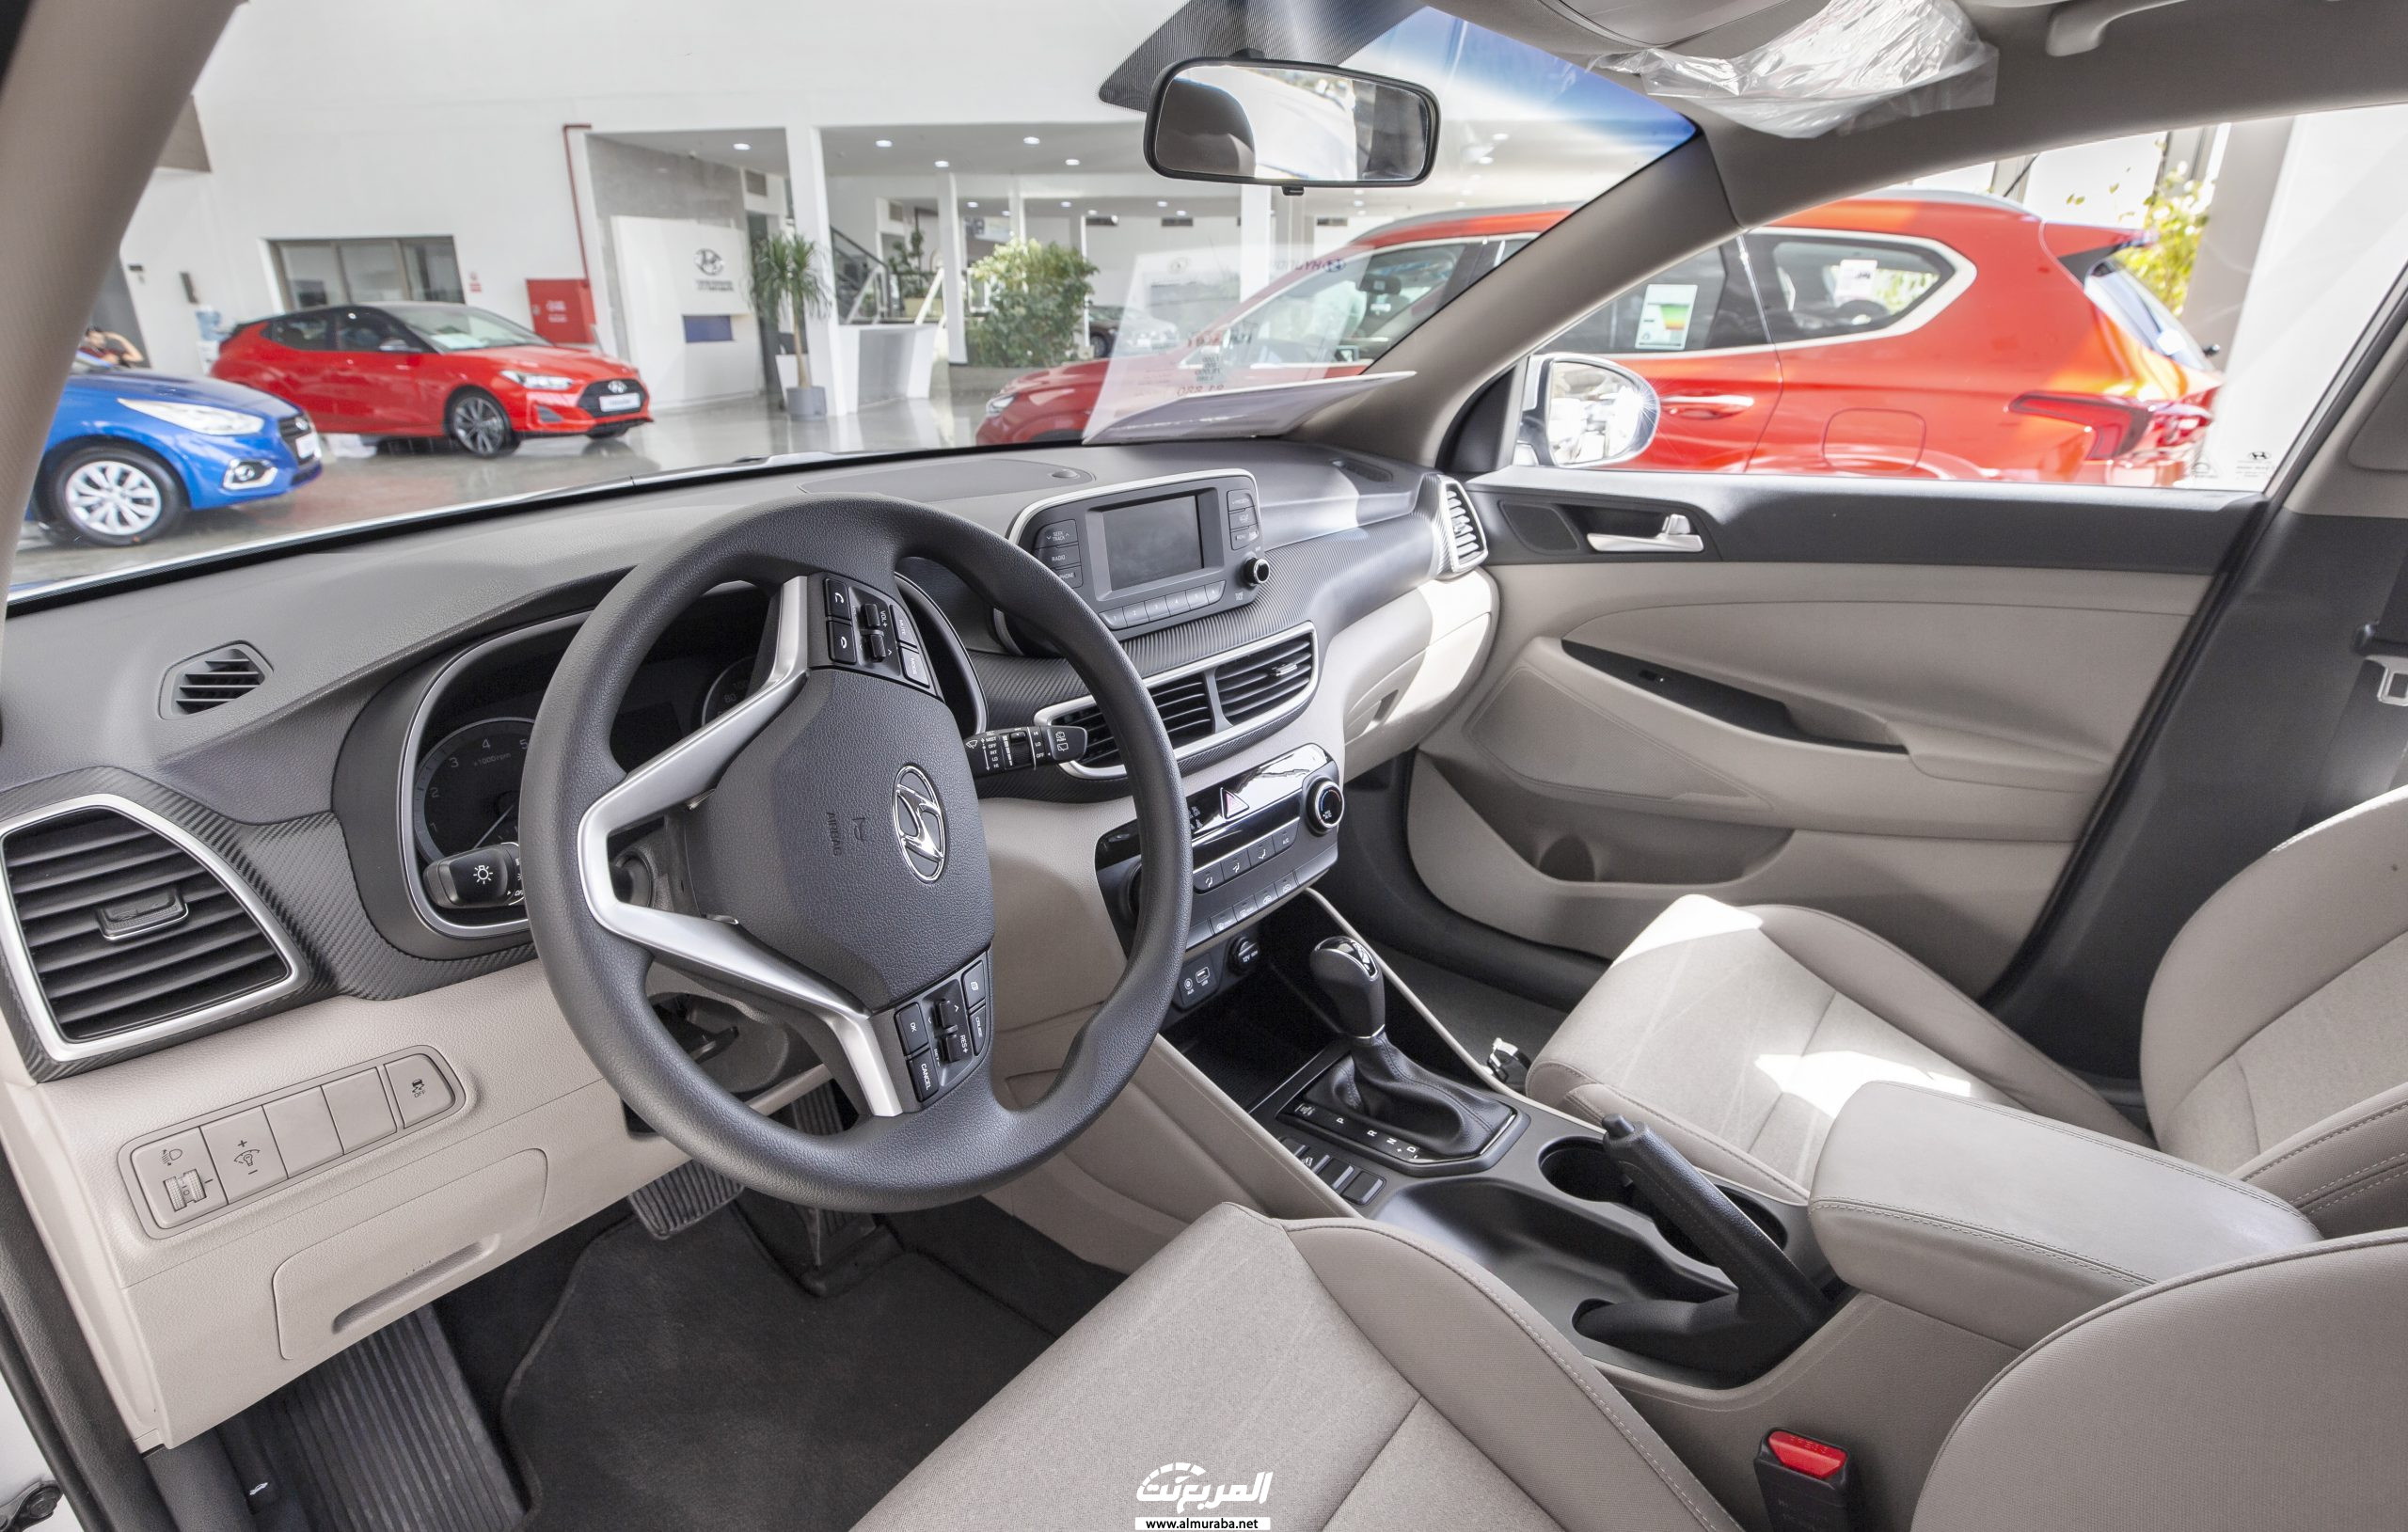 اسعار هيونداي توسان 2020 في السعودية Hyundai Tucson 2